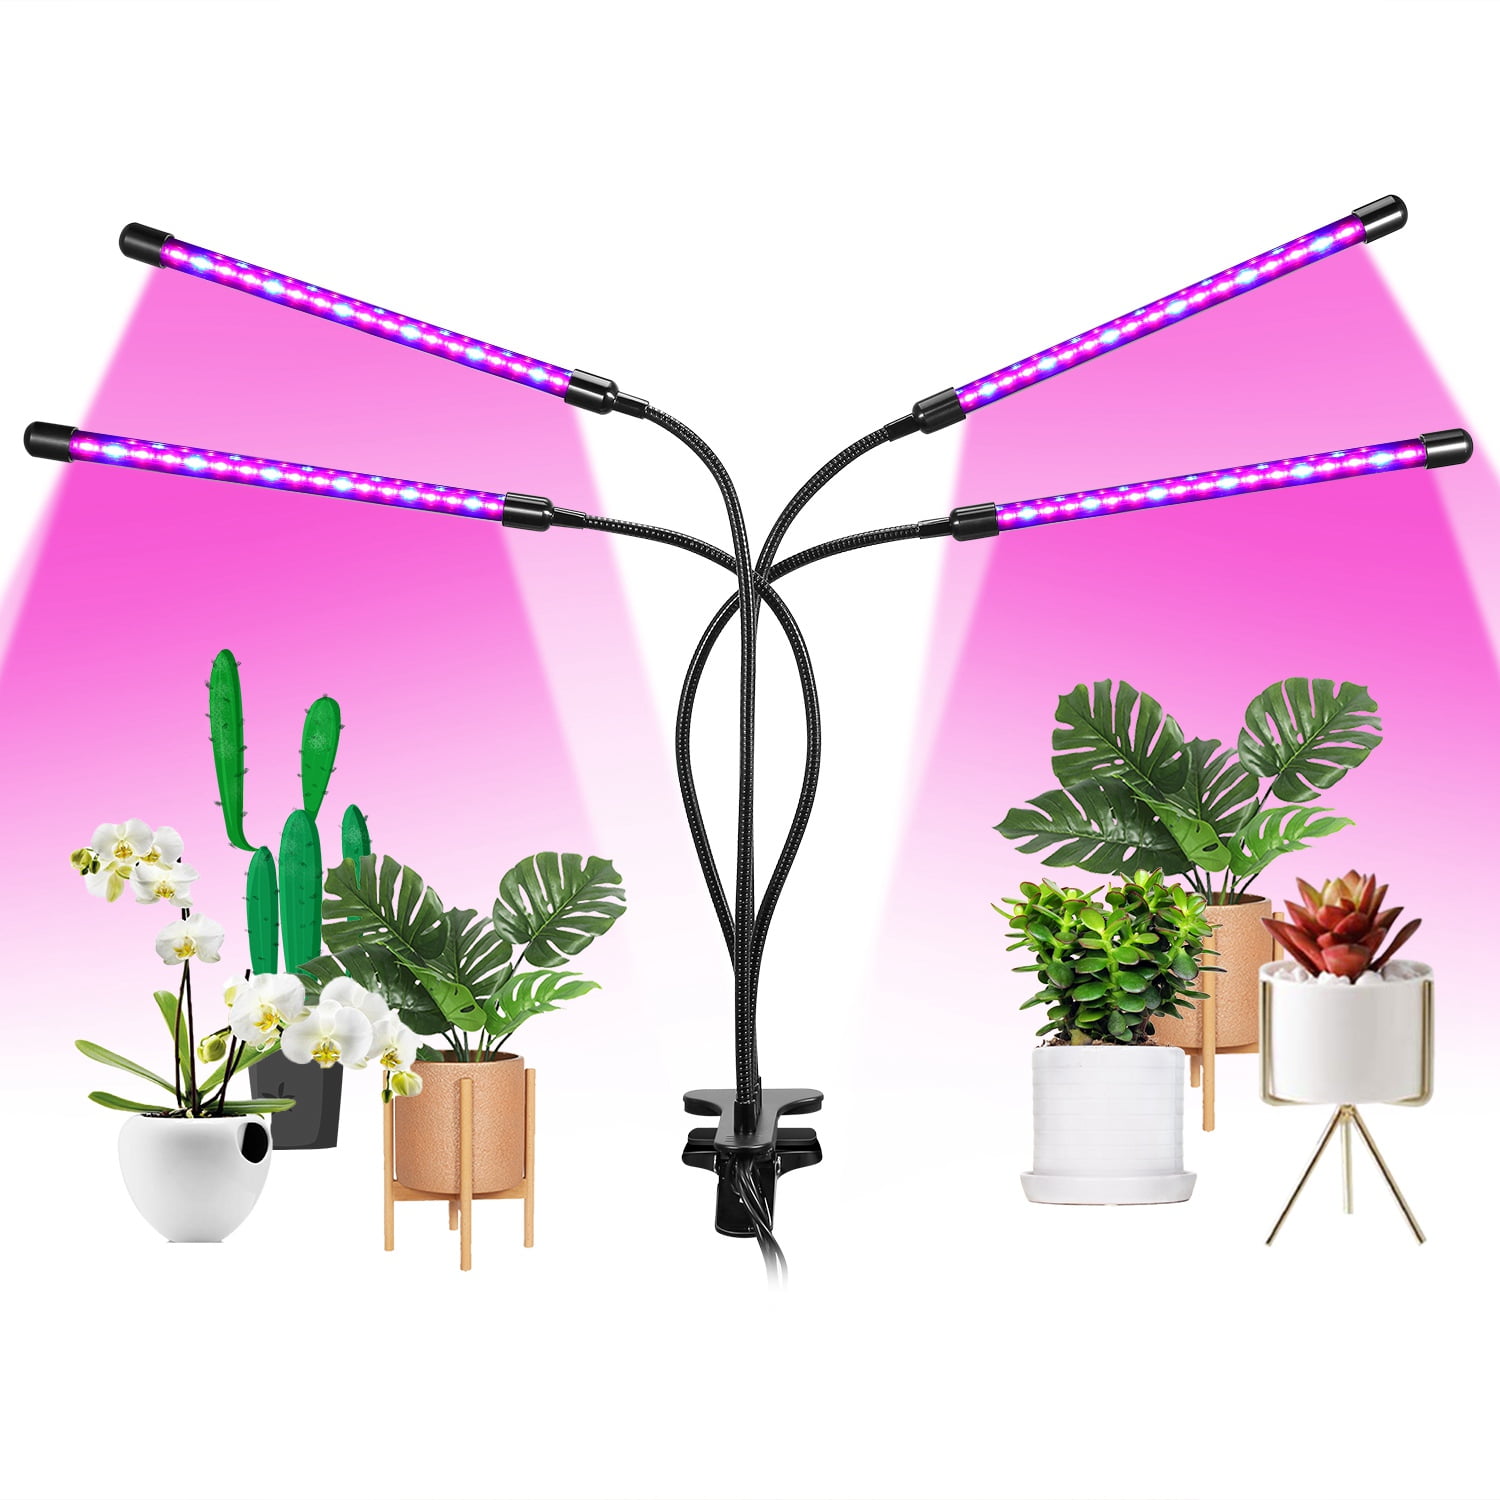 LED Grow Light Plant Big Head Growing Lamp Lights for Indoor Plants Hydroponics 